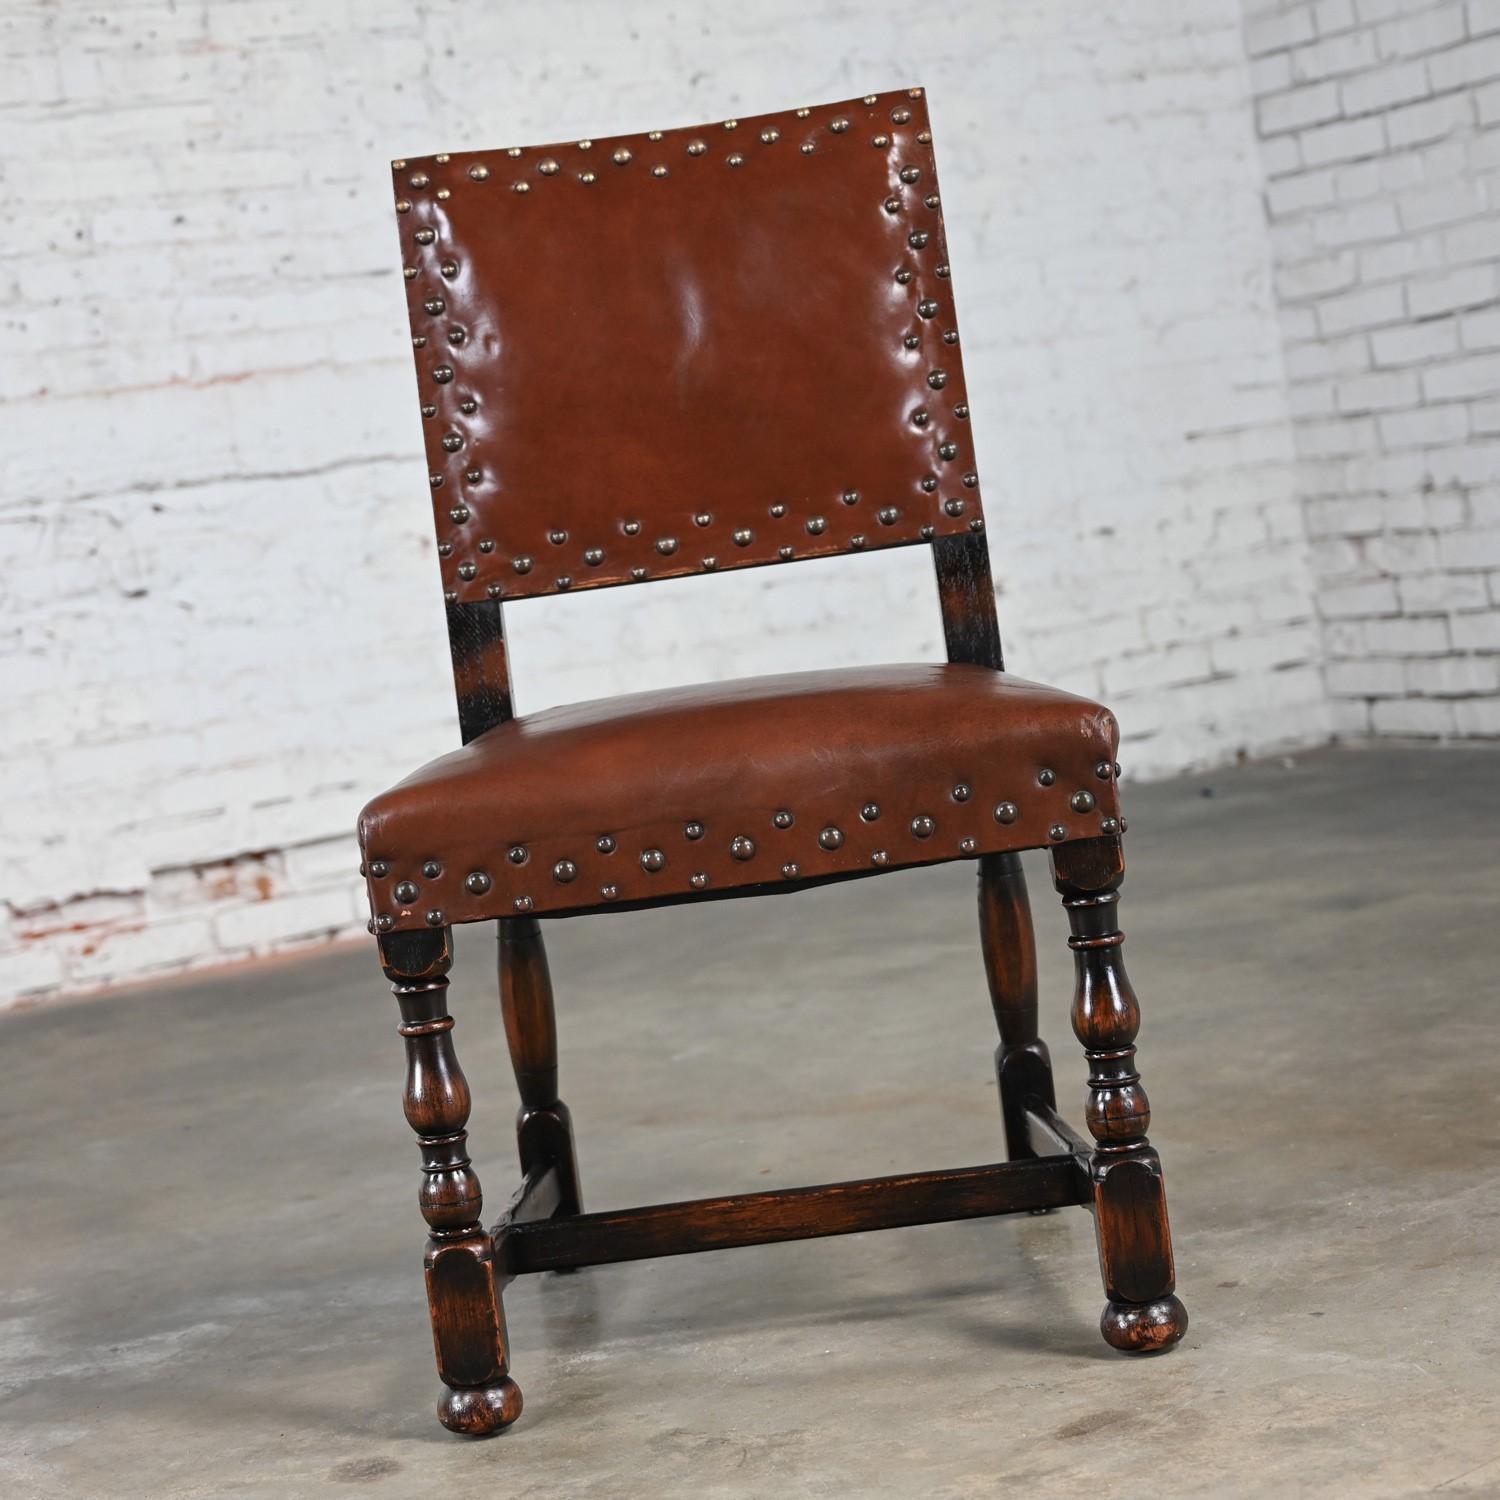 Spanish Revival Century Furniture Oak Side Chair Cognac Leather Nailhead Details For Sale 3